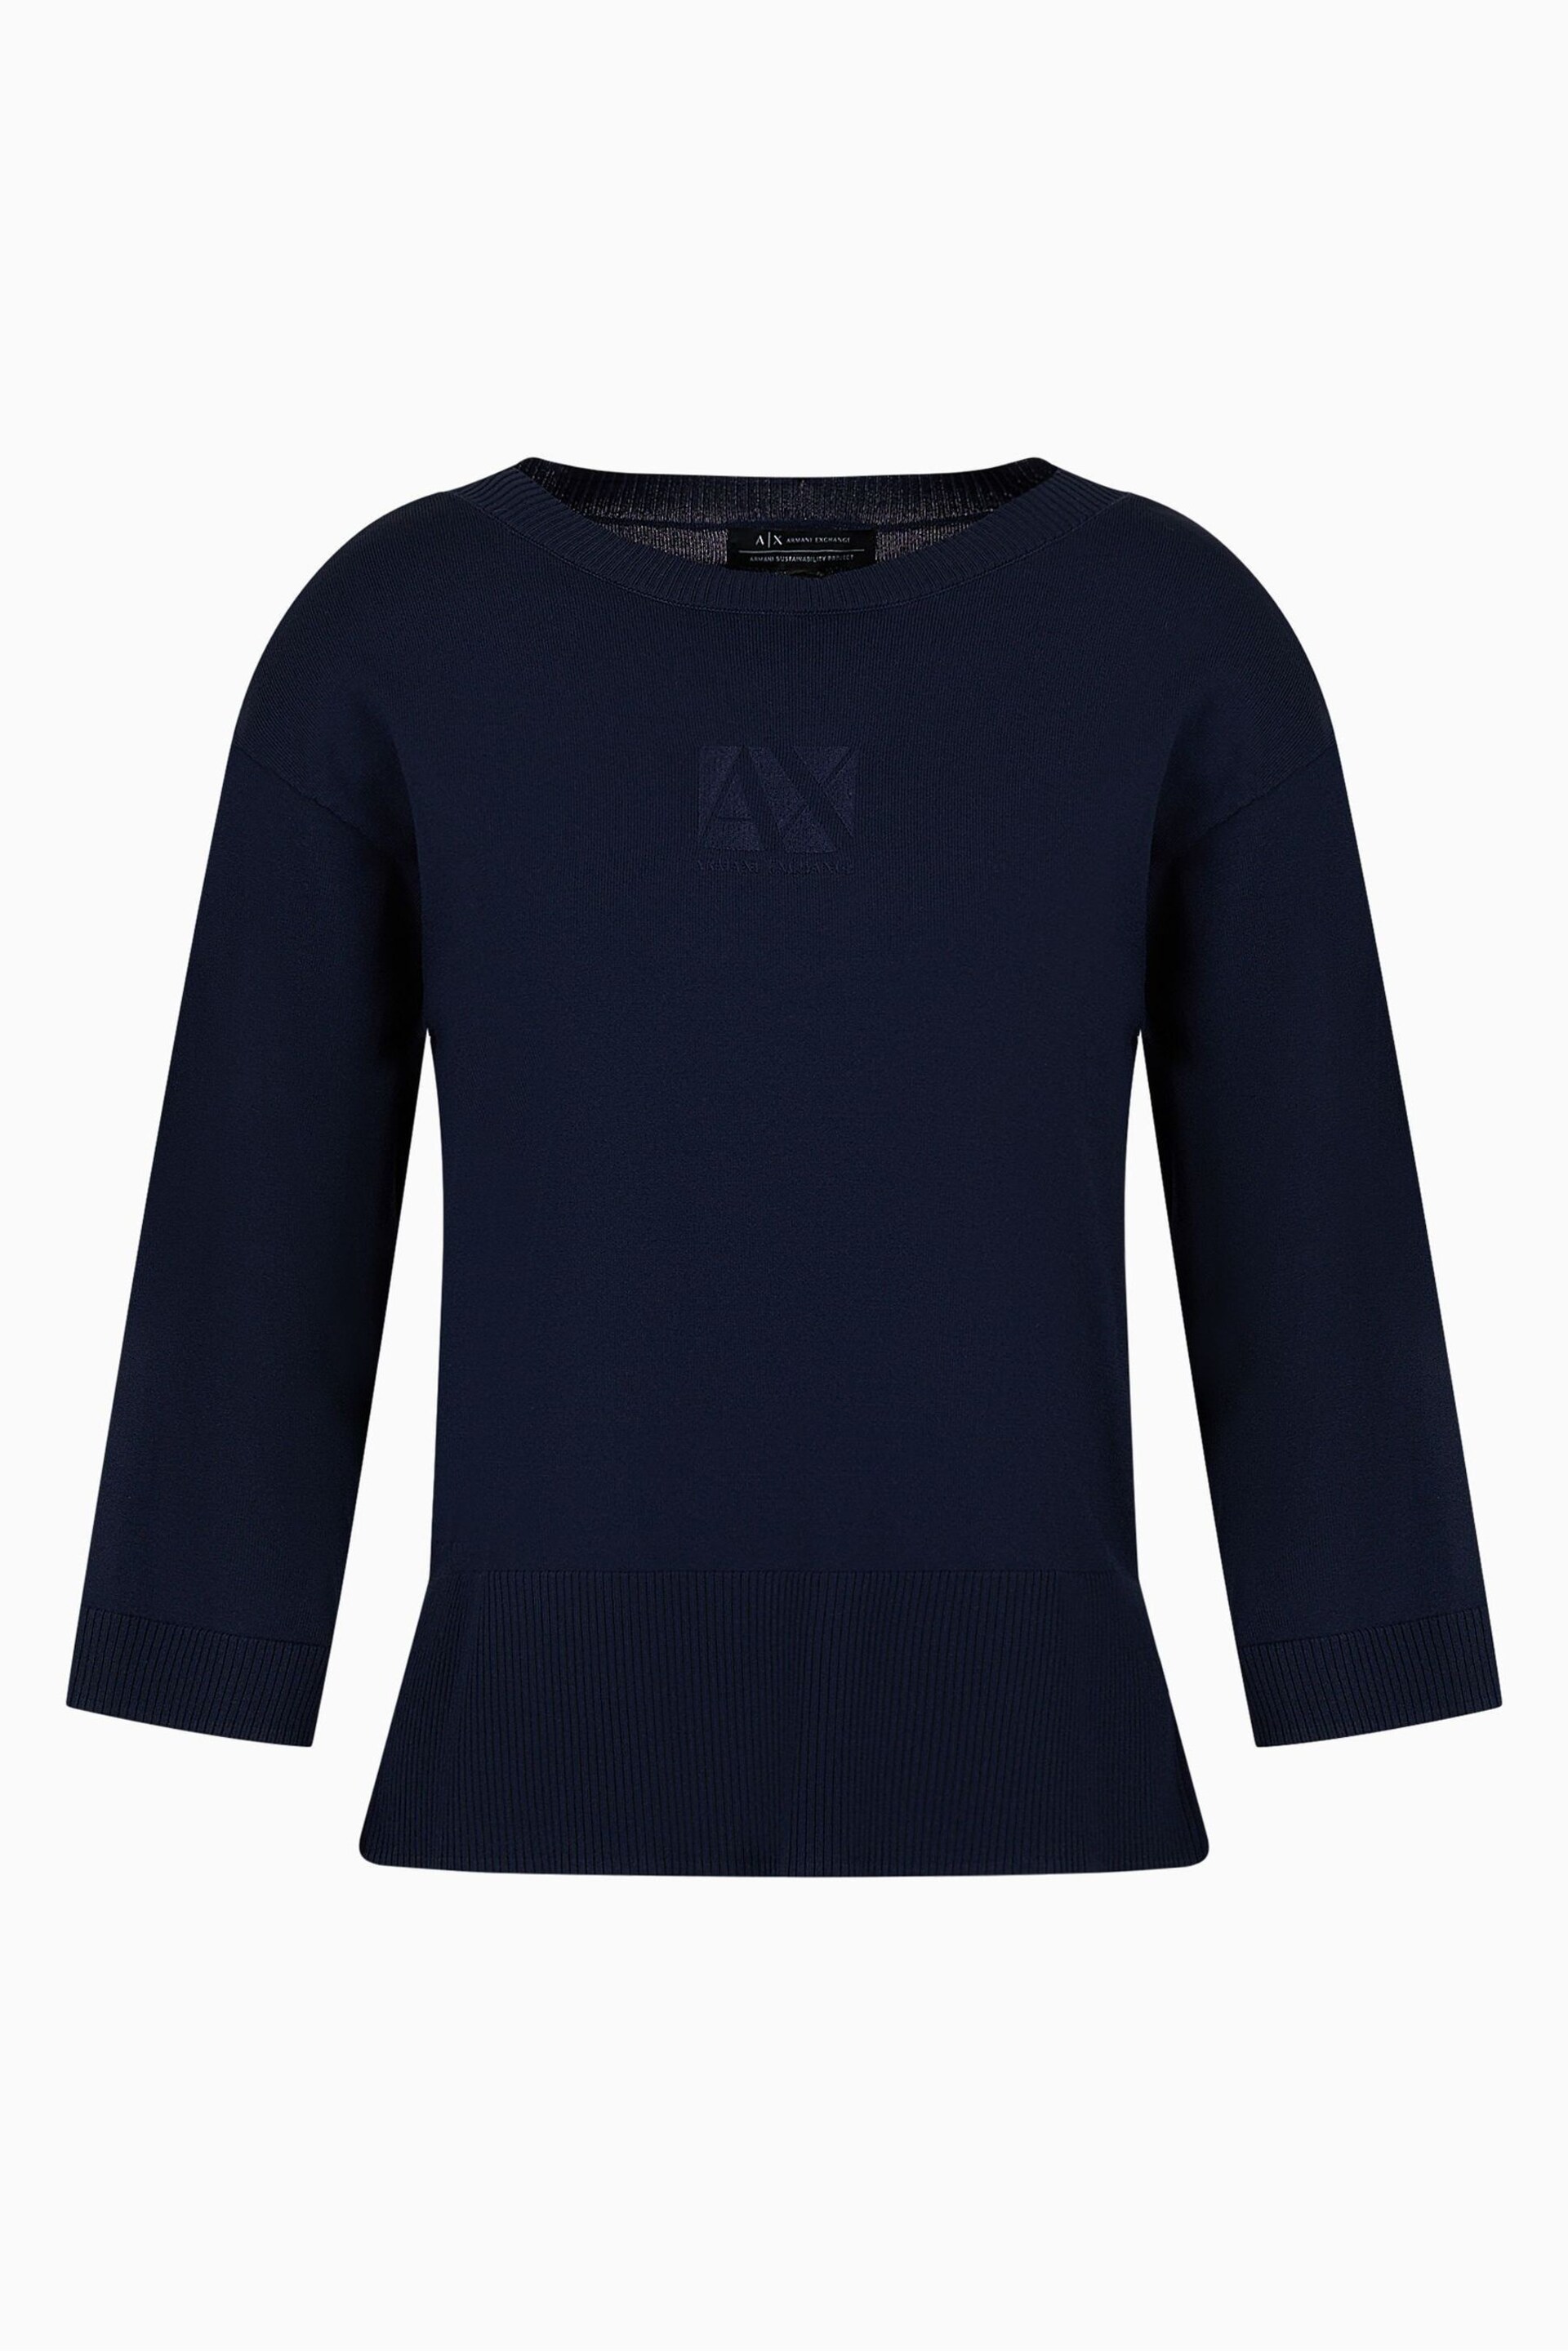 Armani Exchange Navy Logo Knitted Jumper - Image 5 of 5